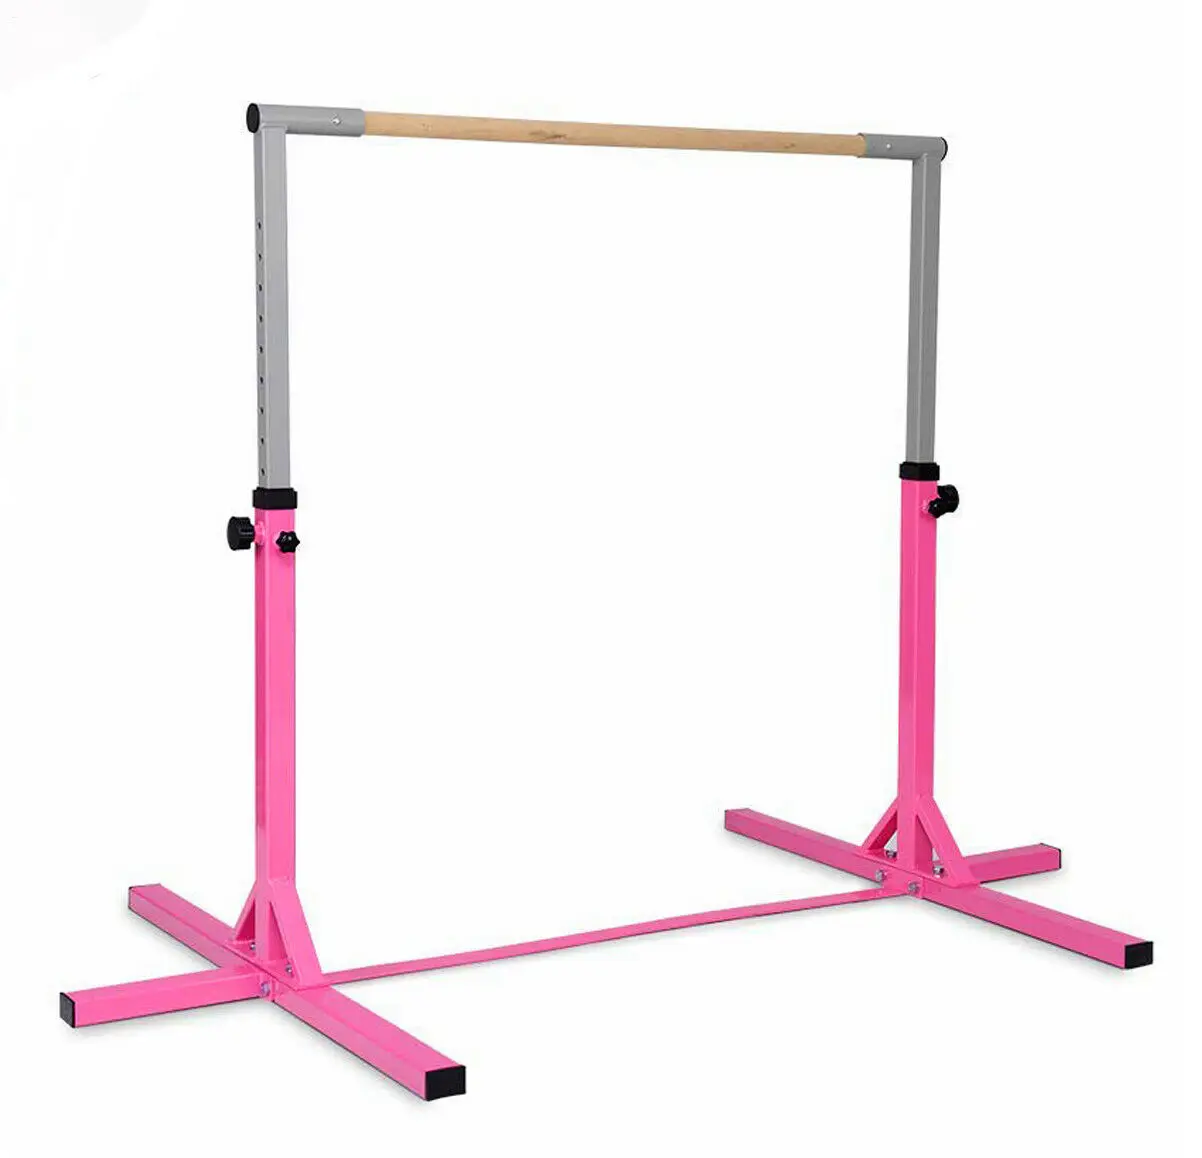 

130cm Adjustable For Kids Exercise Gymnastic Bar Horizontal Sports Gym Training kids kip bar, Any